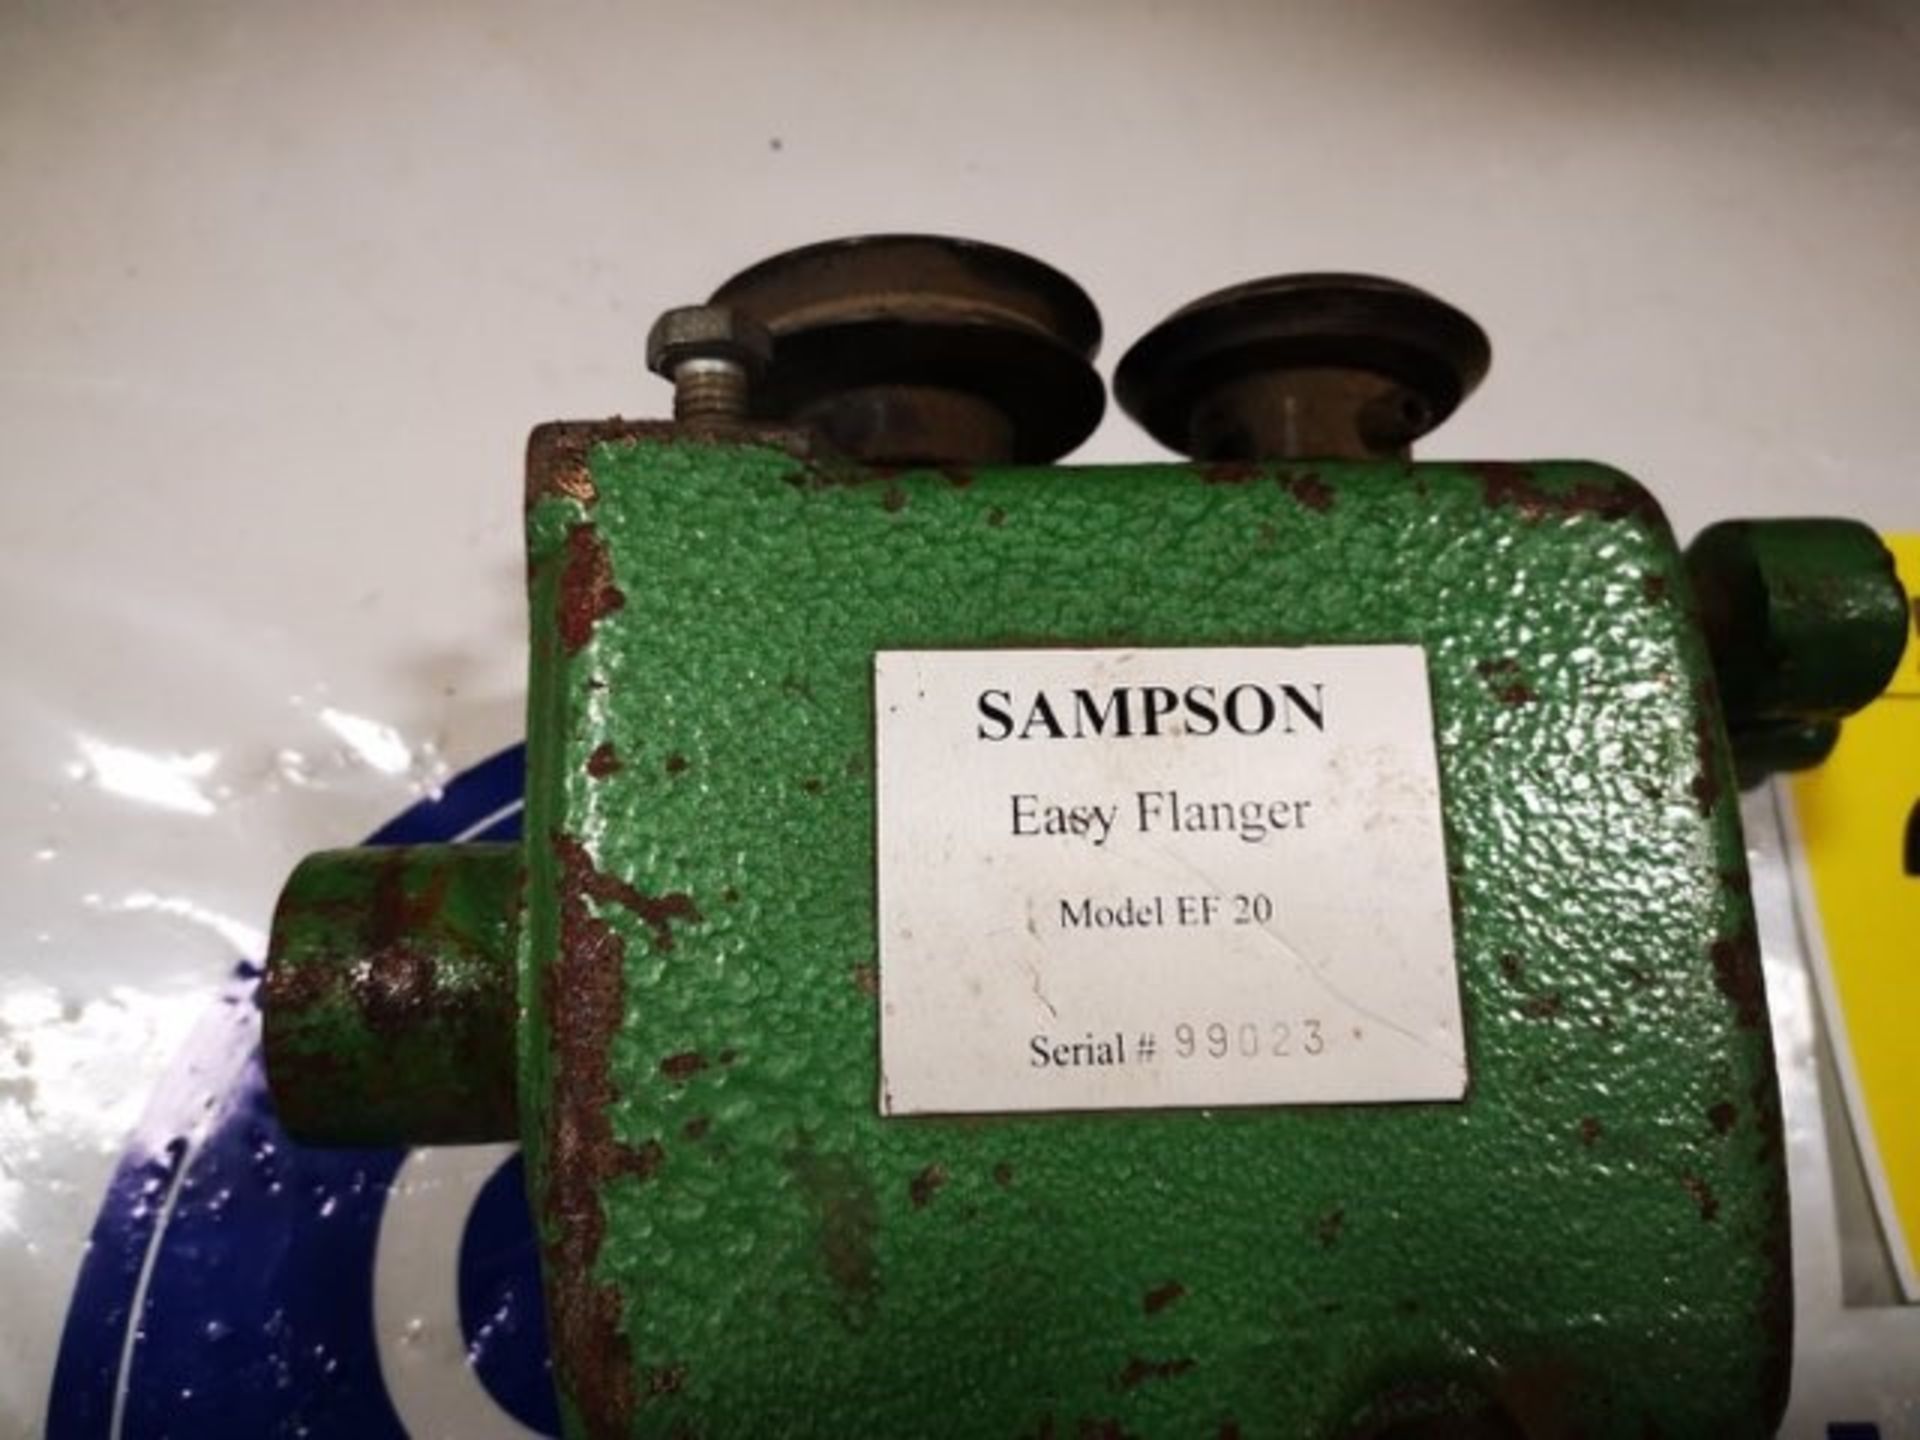 SAMPSON, EF 20, EASY FLANGER, S/N 99023 - Image 2 of 2